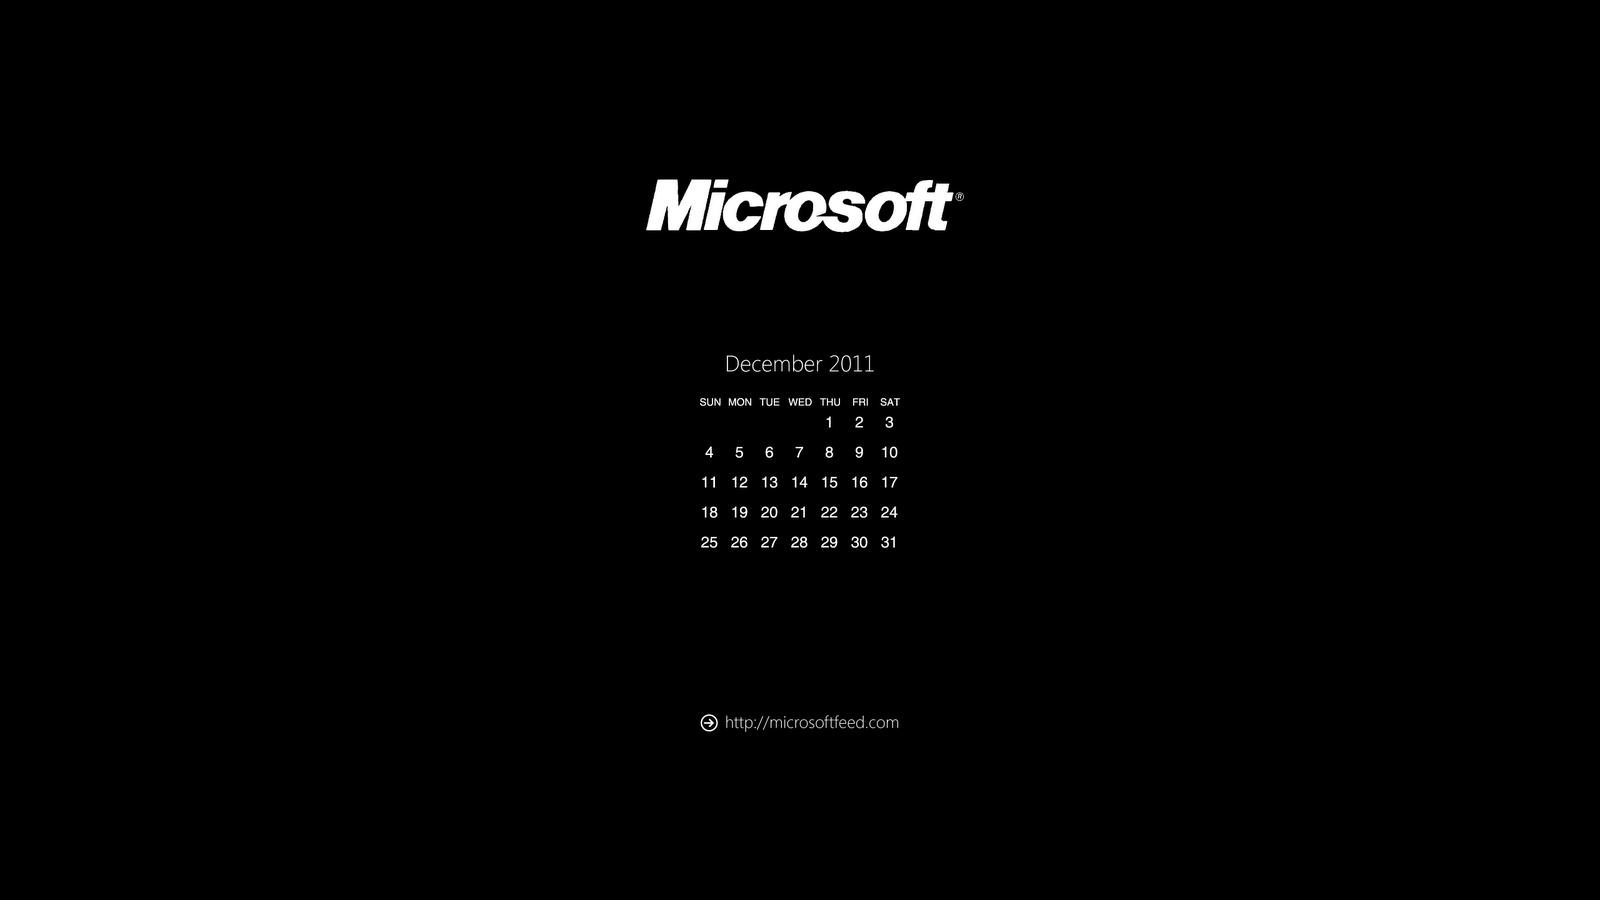 http://2.bp.blogspot.com/-yDqeXK7JqQA/TtvOcekLwcI/AAAAAAAAByo/Y5HB4v26xlk/s1600/Microsoft-Metro-Style-Desktop-Wallpaper-Calendar-December-2011.png